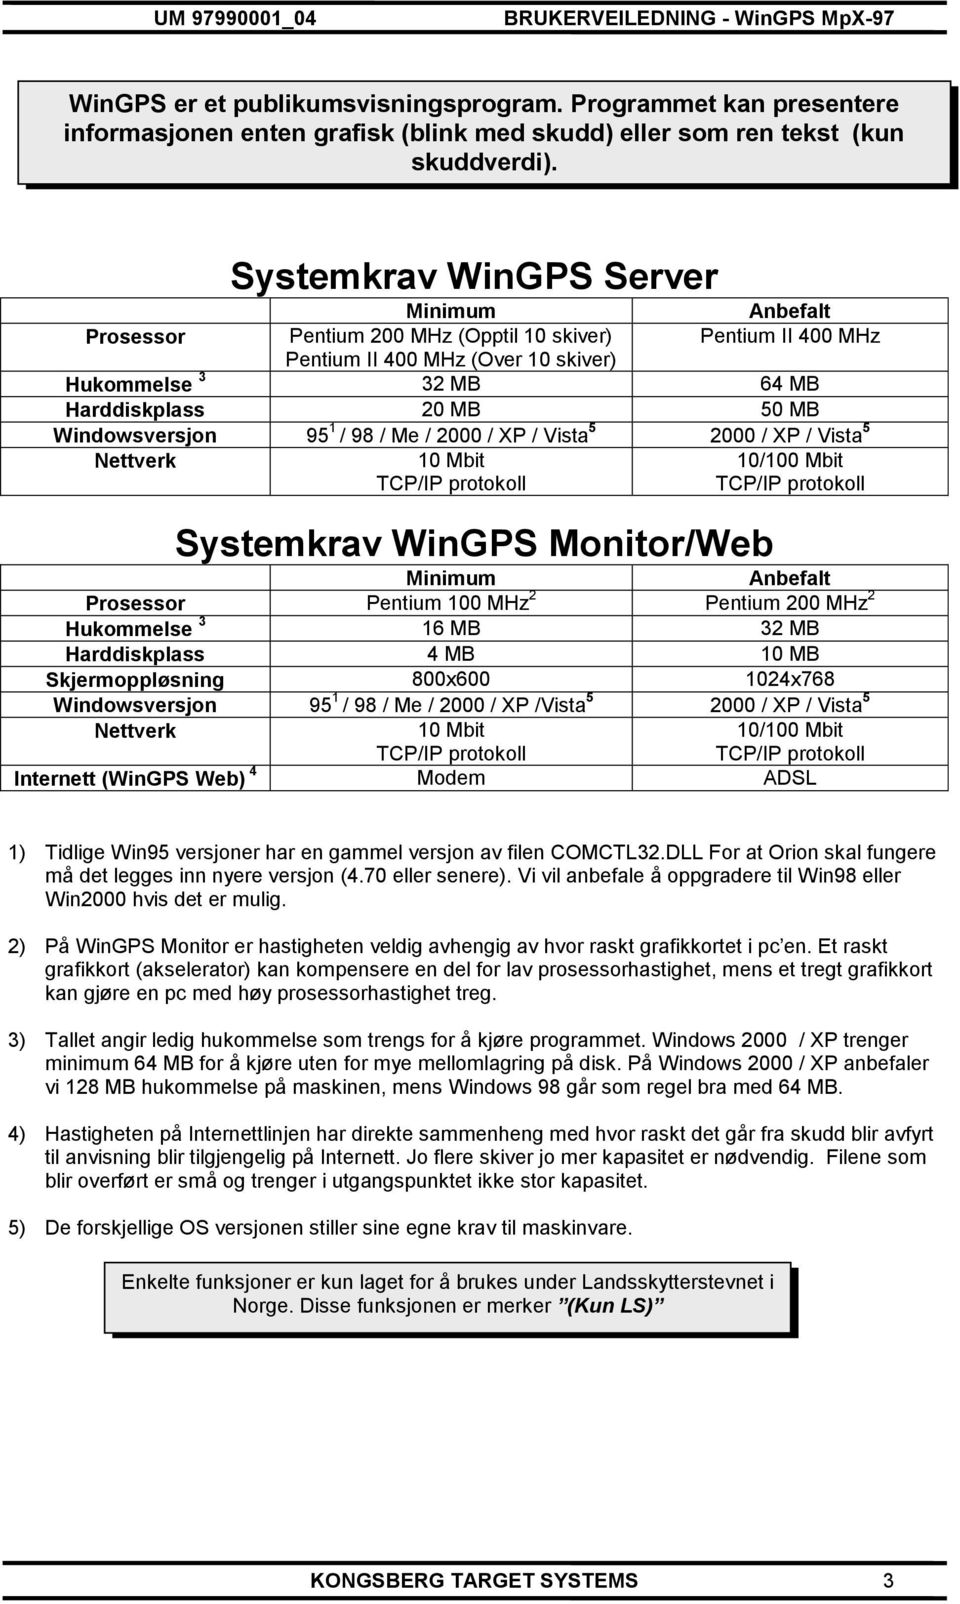 Windowsversjon 95 1 / 98 / Me / 2000 / XP / Vista 5 2000 / XP / Vista 5 Nettverk 10 Mbit TCP/IP protokoll 10/100 Mbit TCP/IP protokoll Systemkrav WinGPS Monitor/Web Minimum Anbefalt Prosessor Pentium